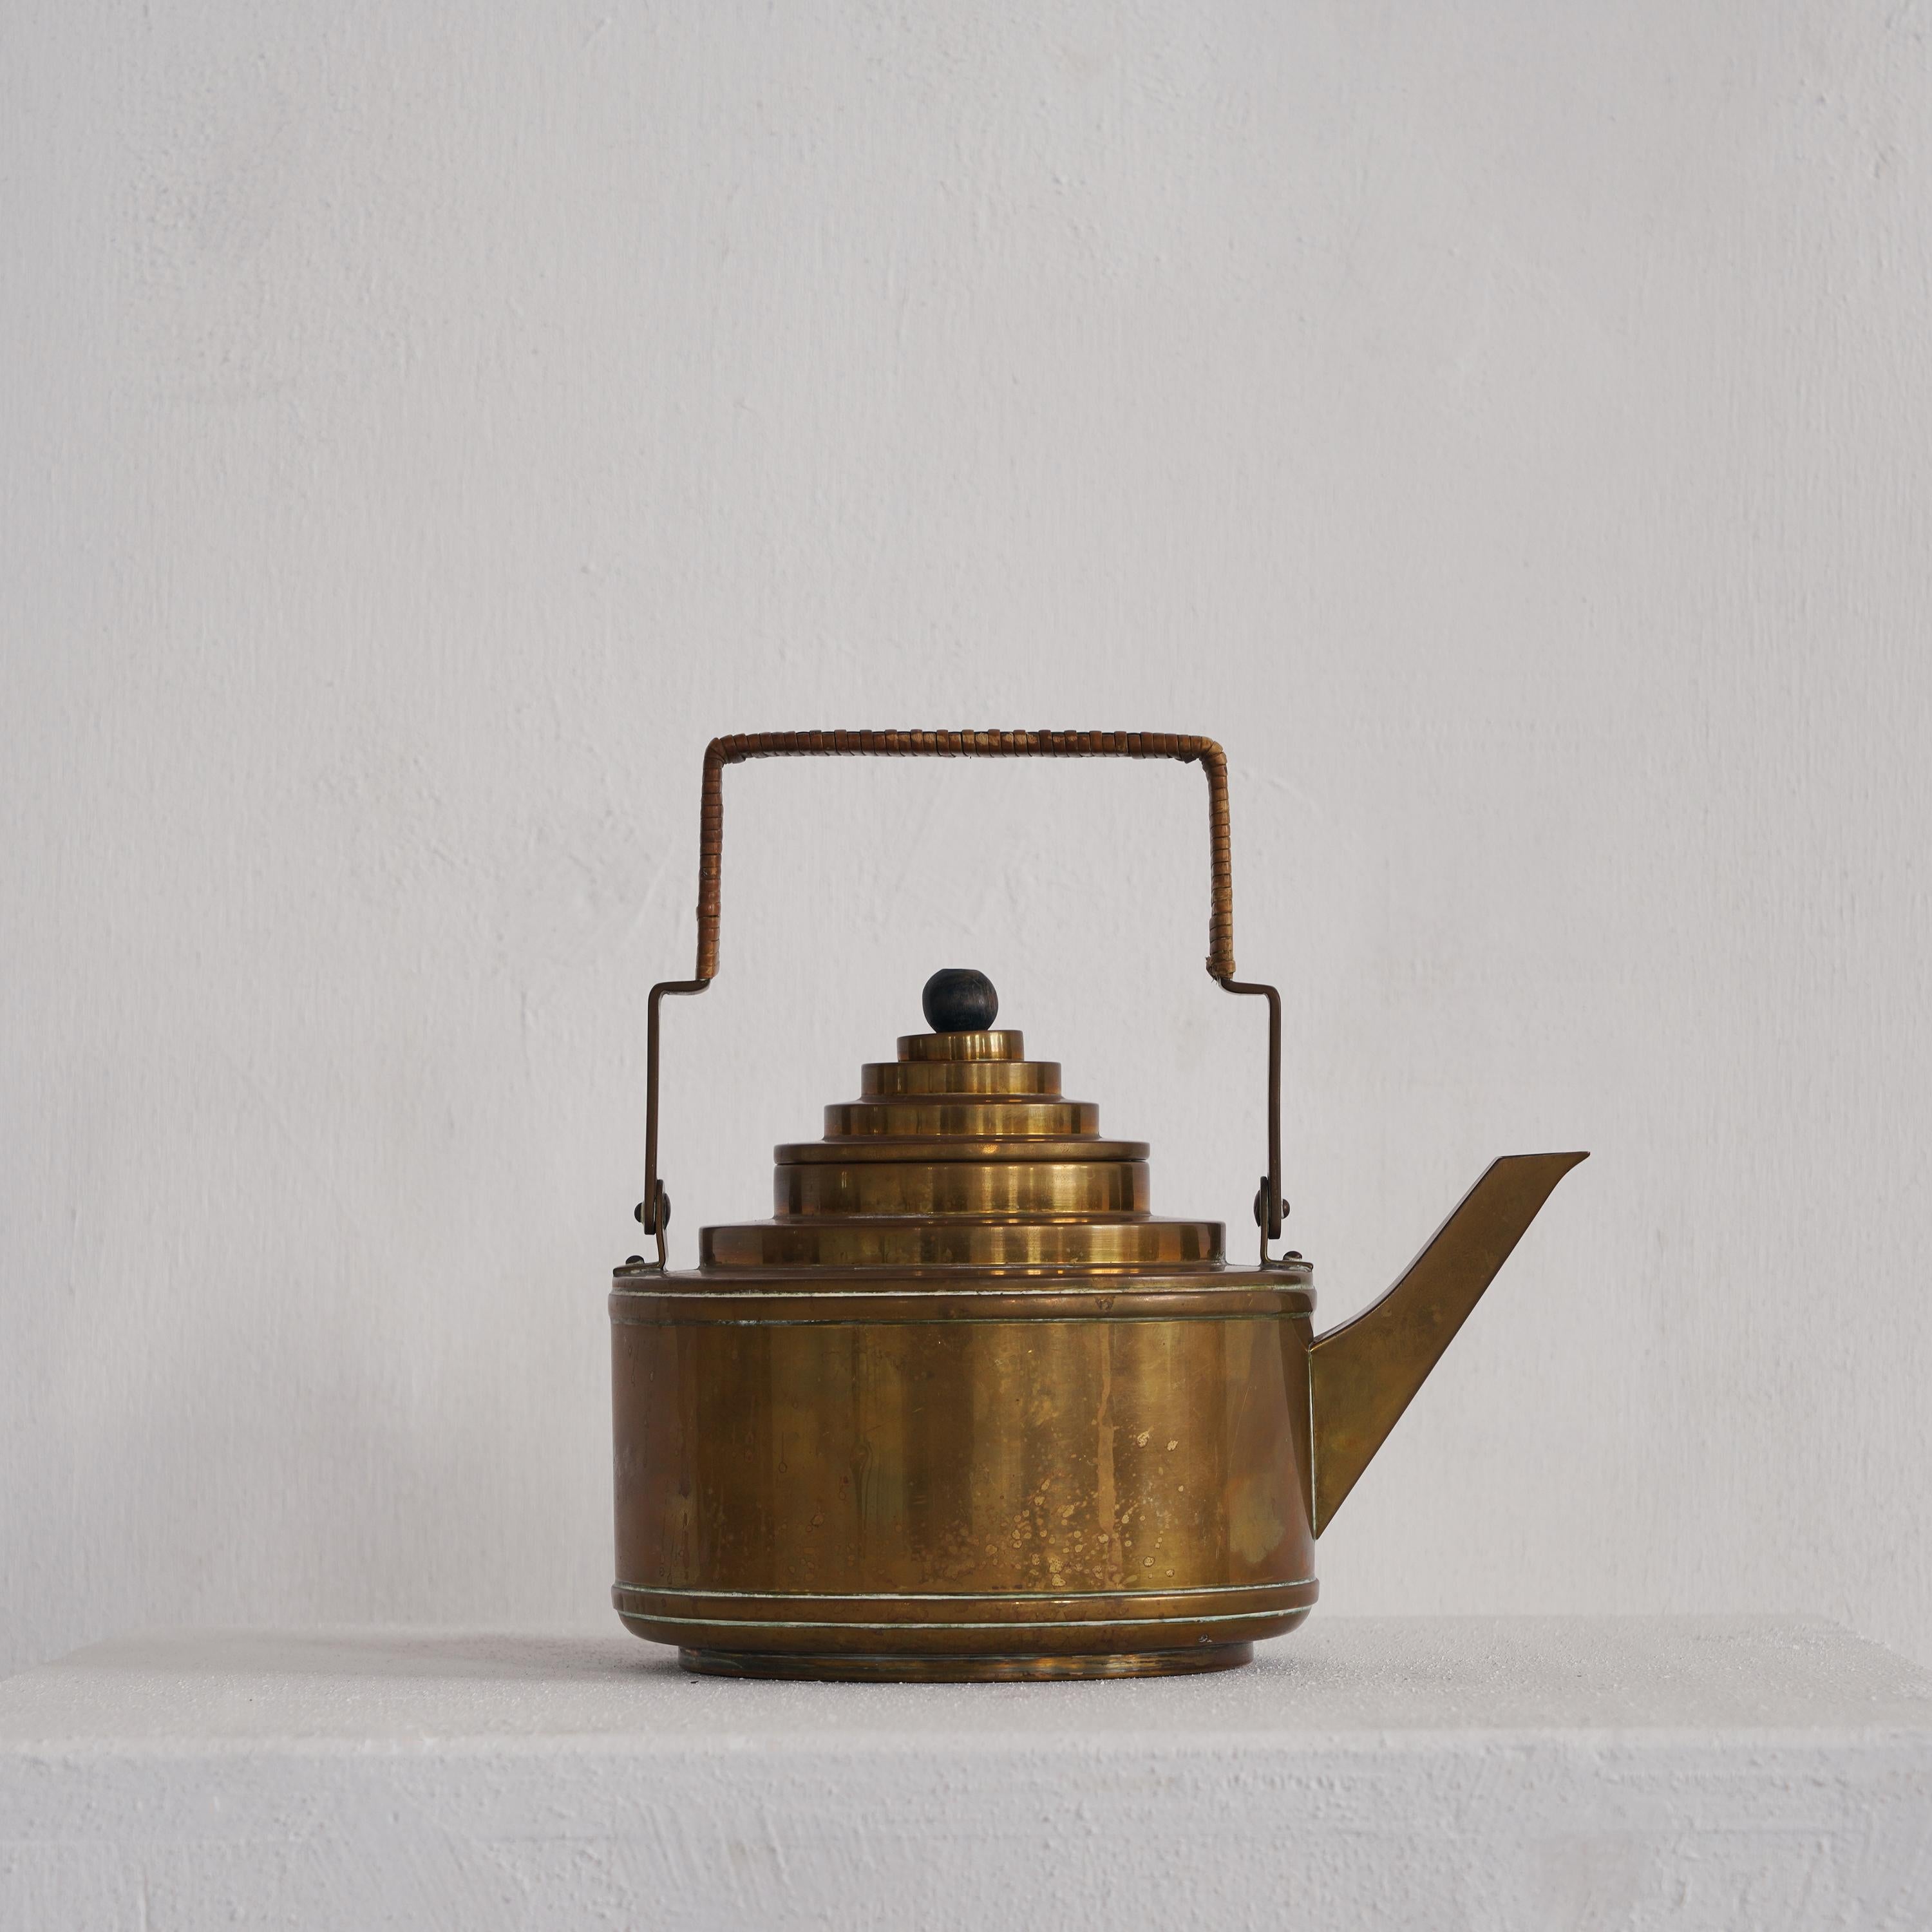 Art Deco Japonist Teapot by Daalderop